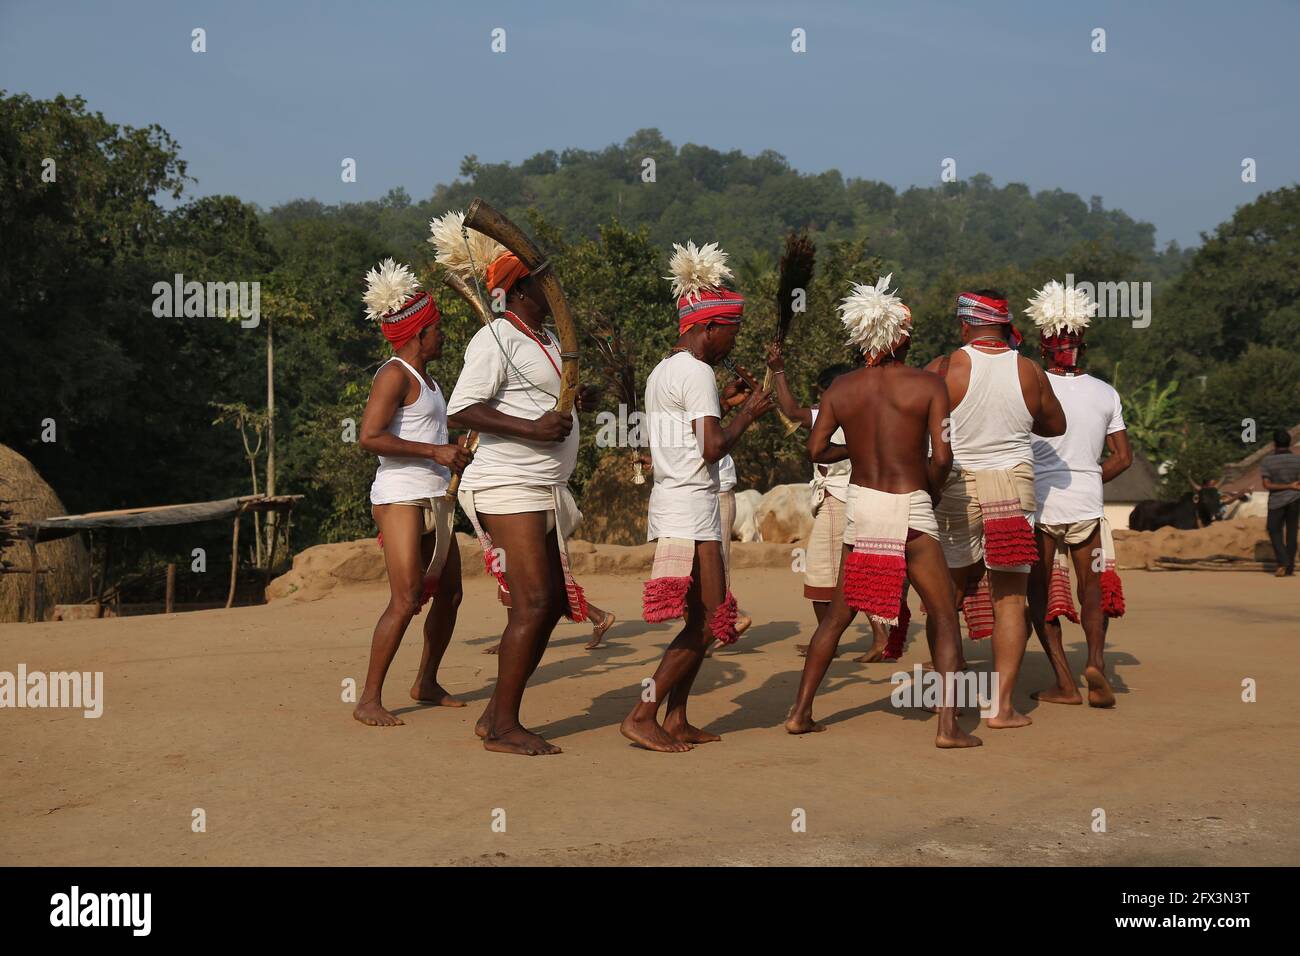 LANJIA SAORA TRIBU -Danza de grupo tradicional. Bailarines masculinos con trapos y cabezas de lomo decorados con plumas blancas de búho tocando tambores, gagerai, trete Foto de stock